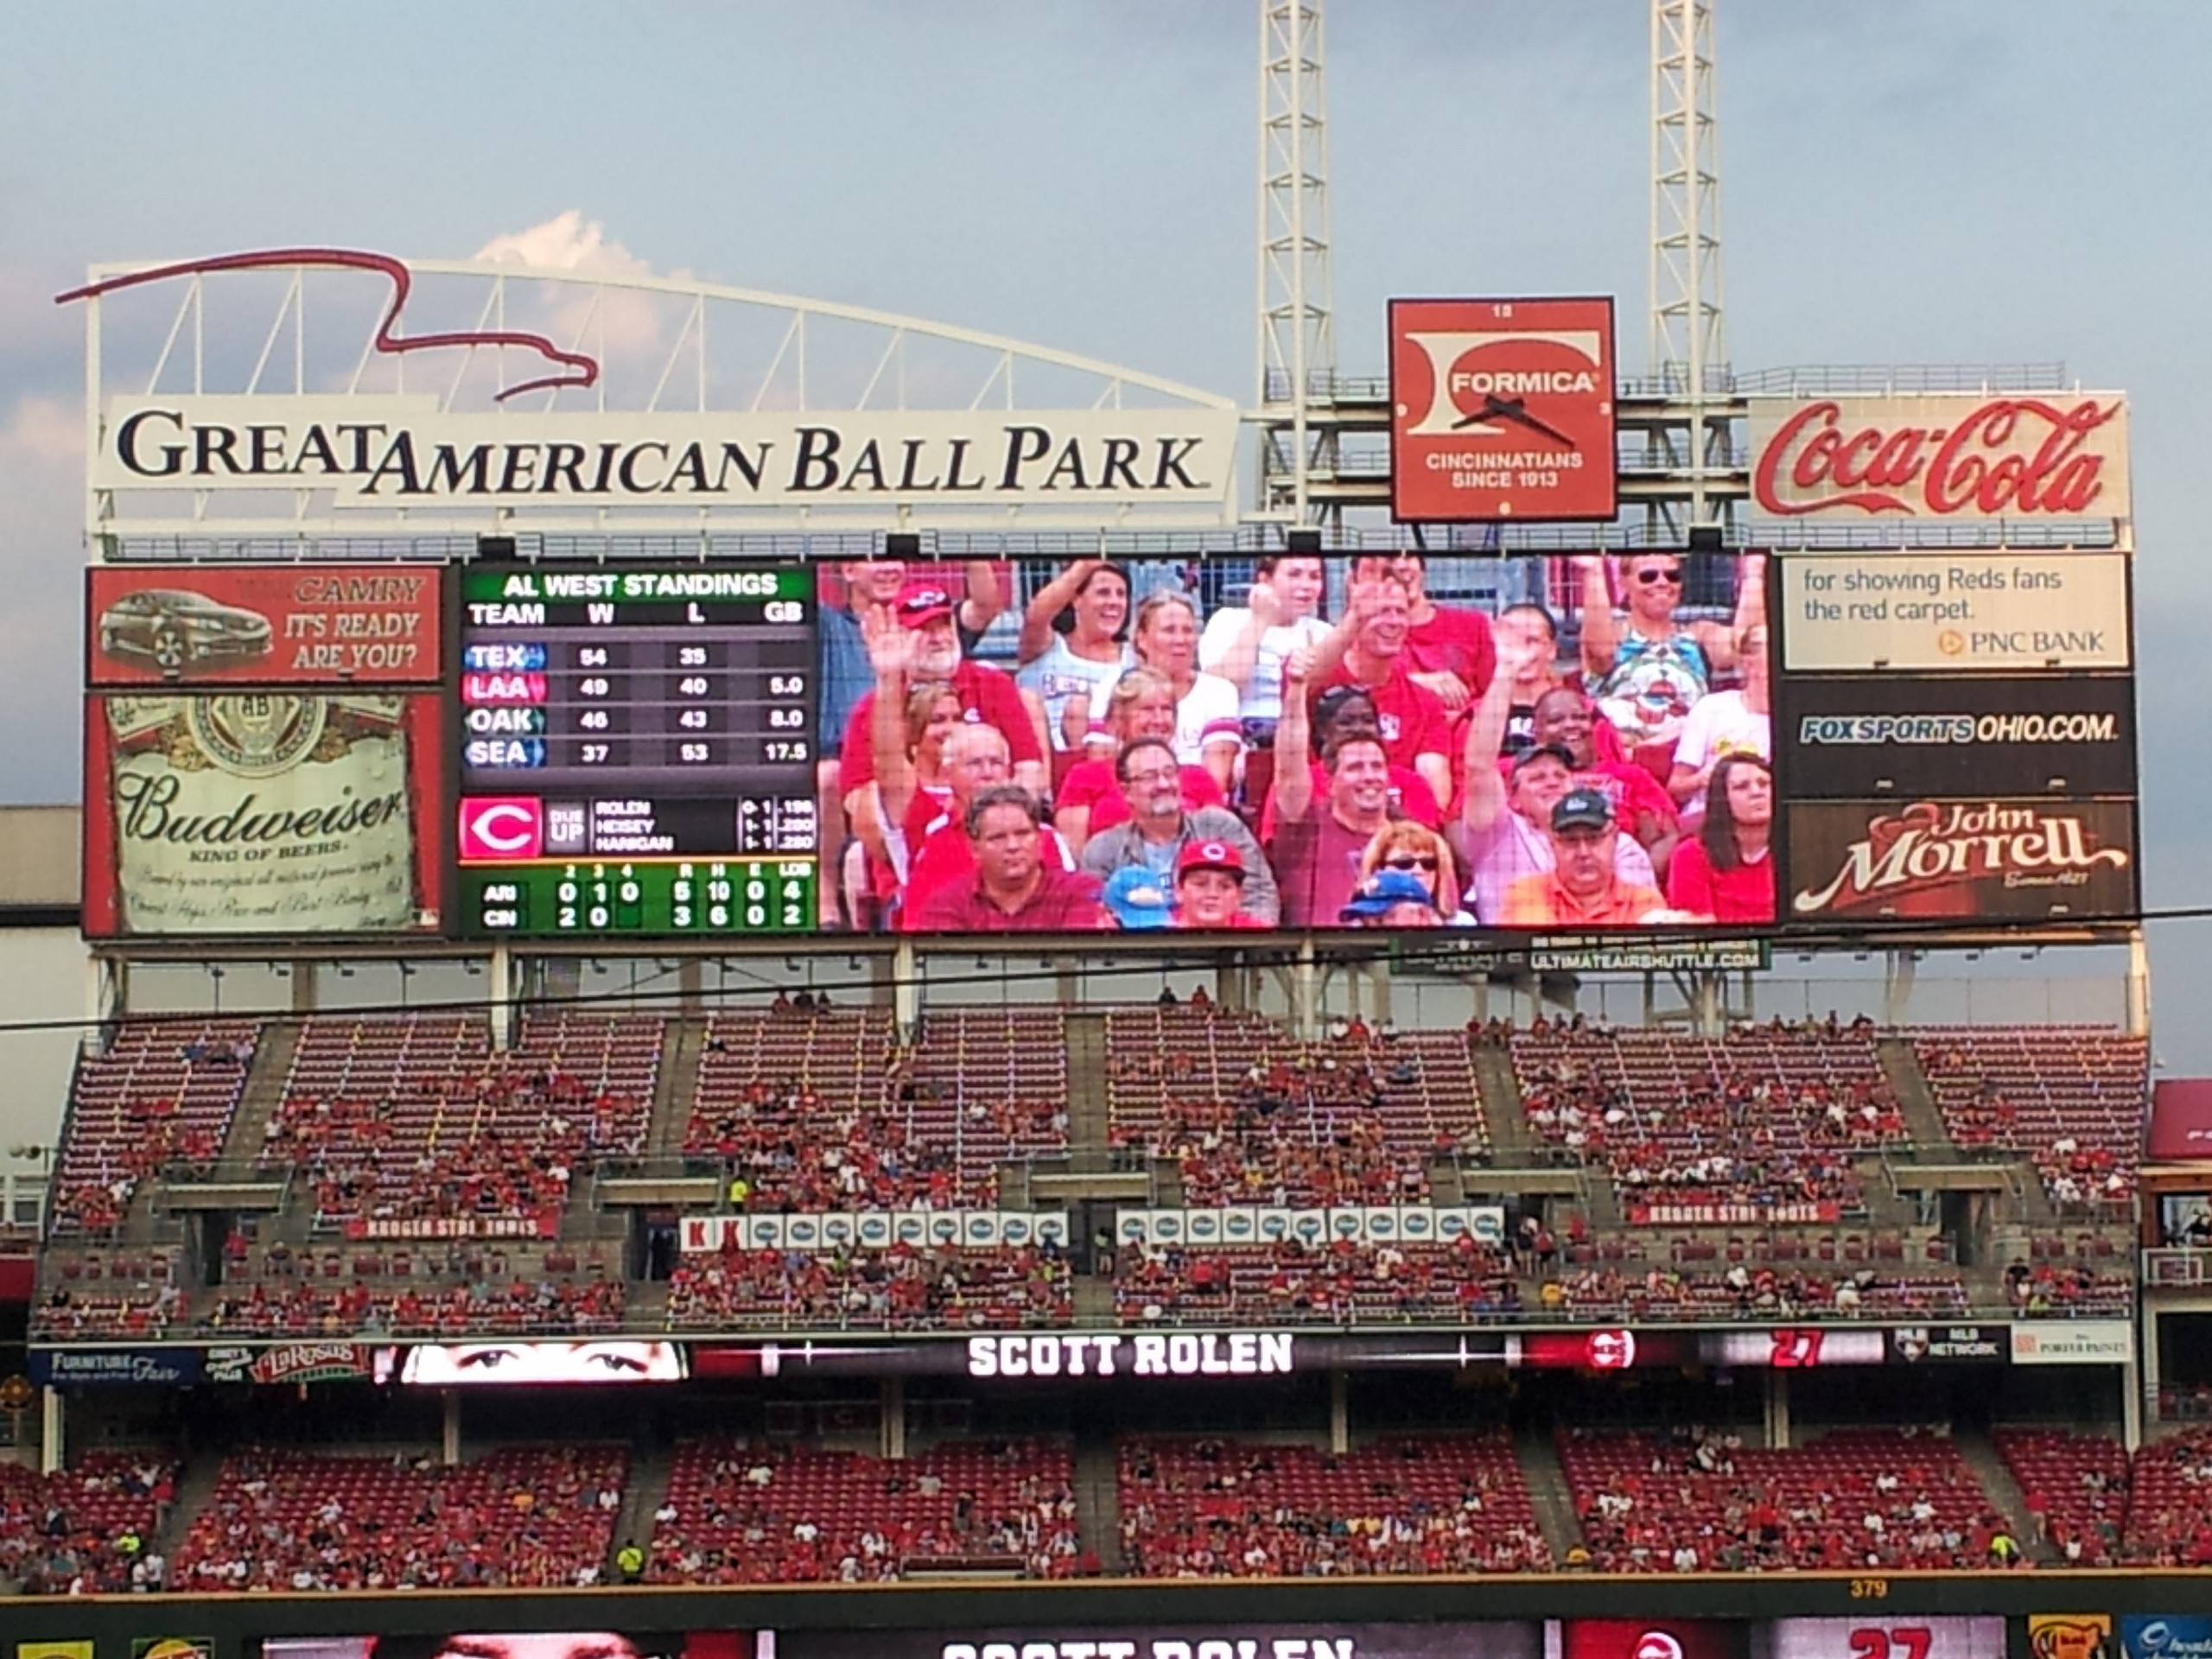 2560x1920 Cincinnati Reds images scoreboard HD wallpaper and background photos